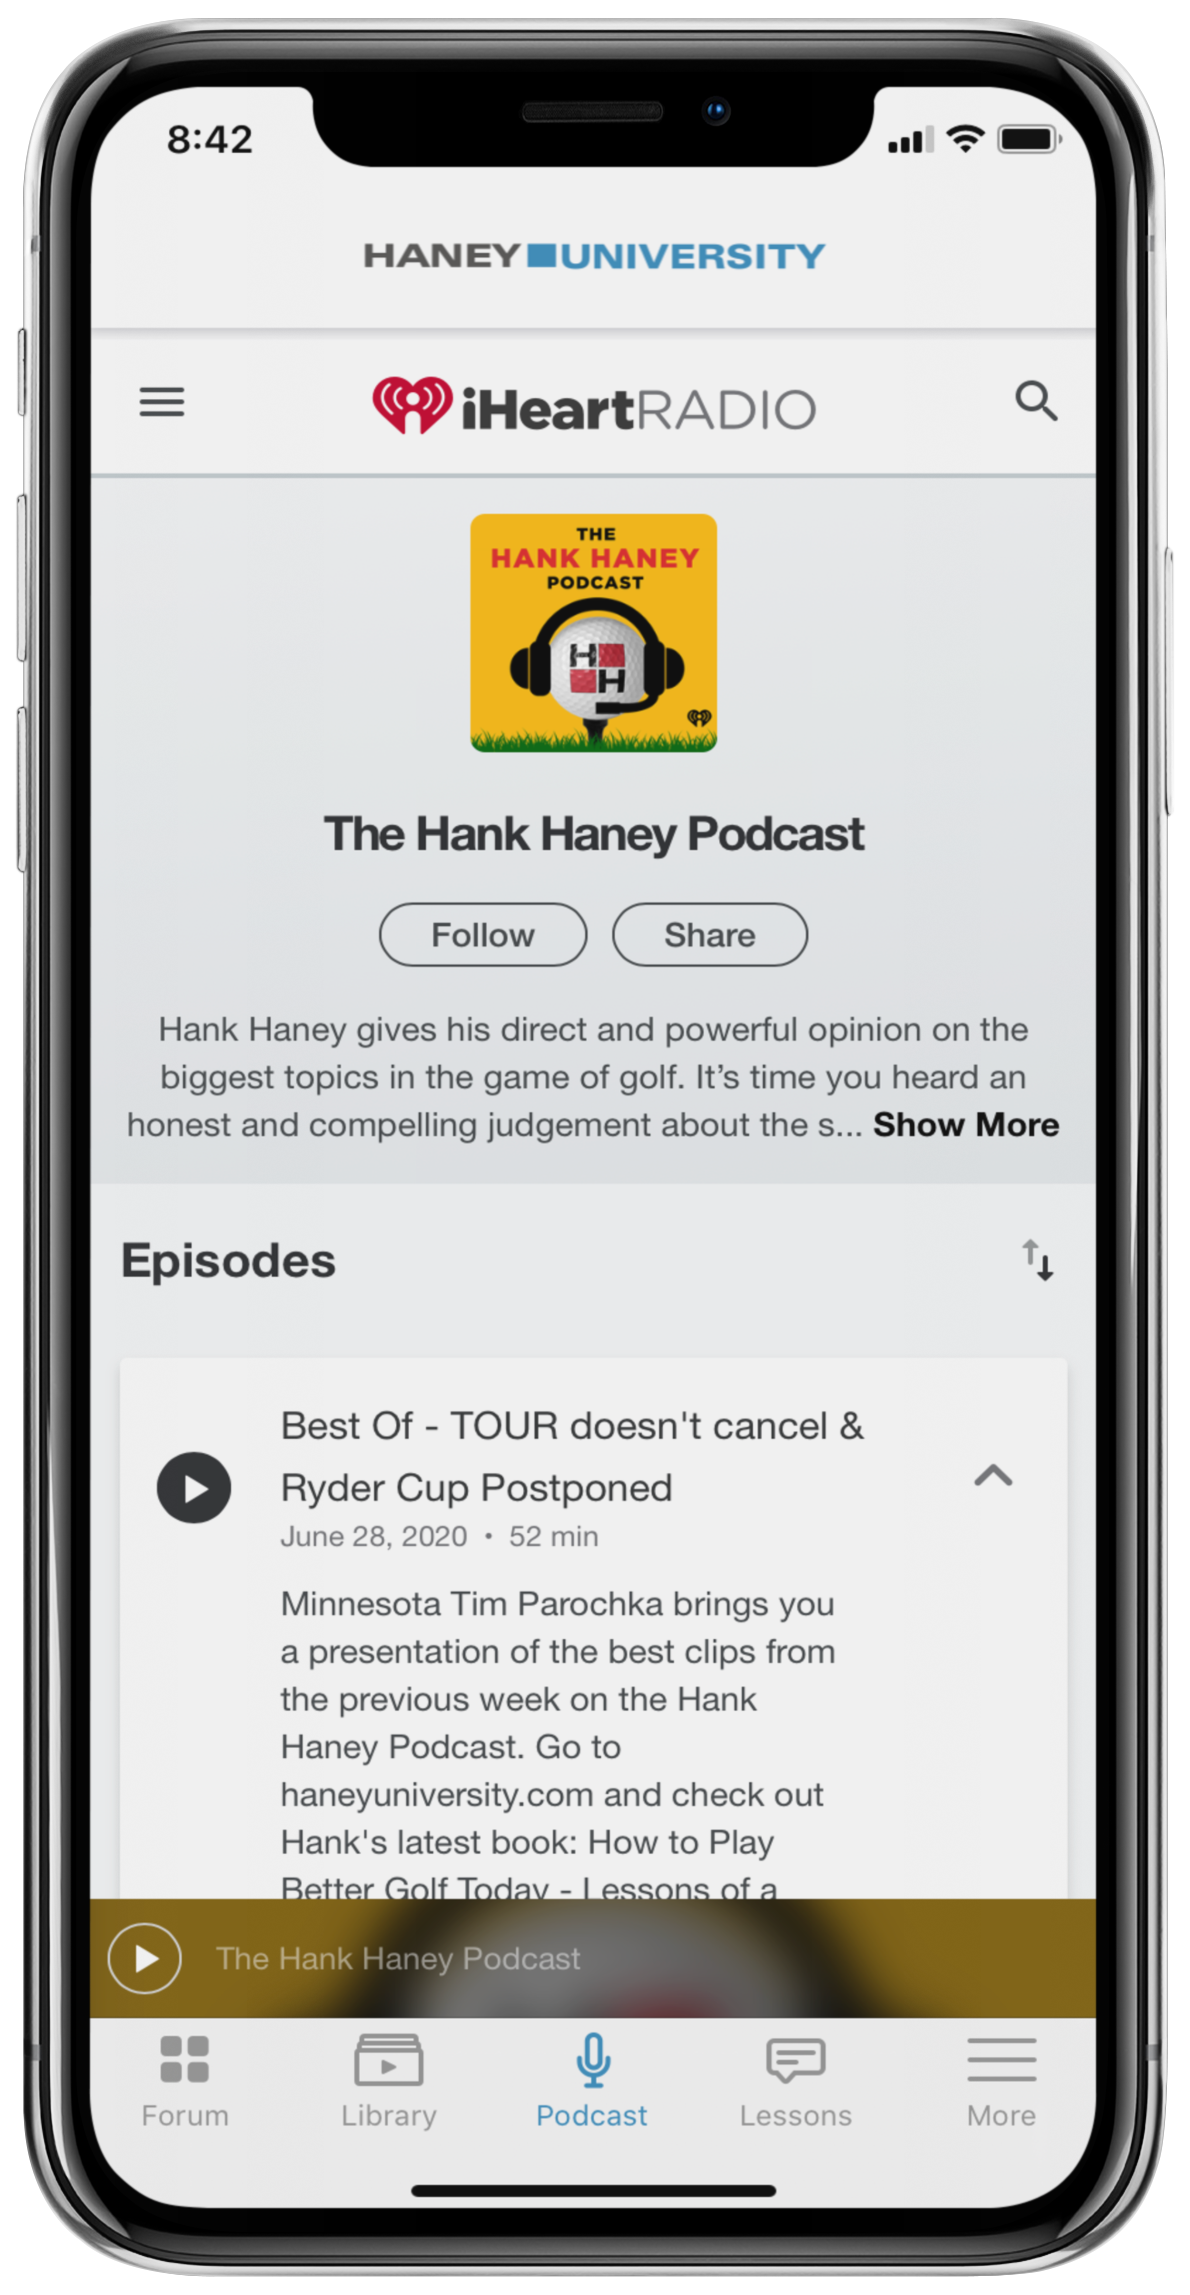 The Hank Haney Podcast